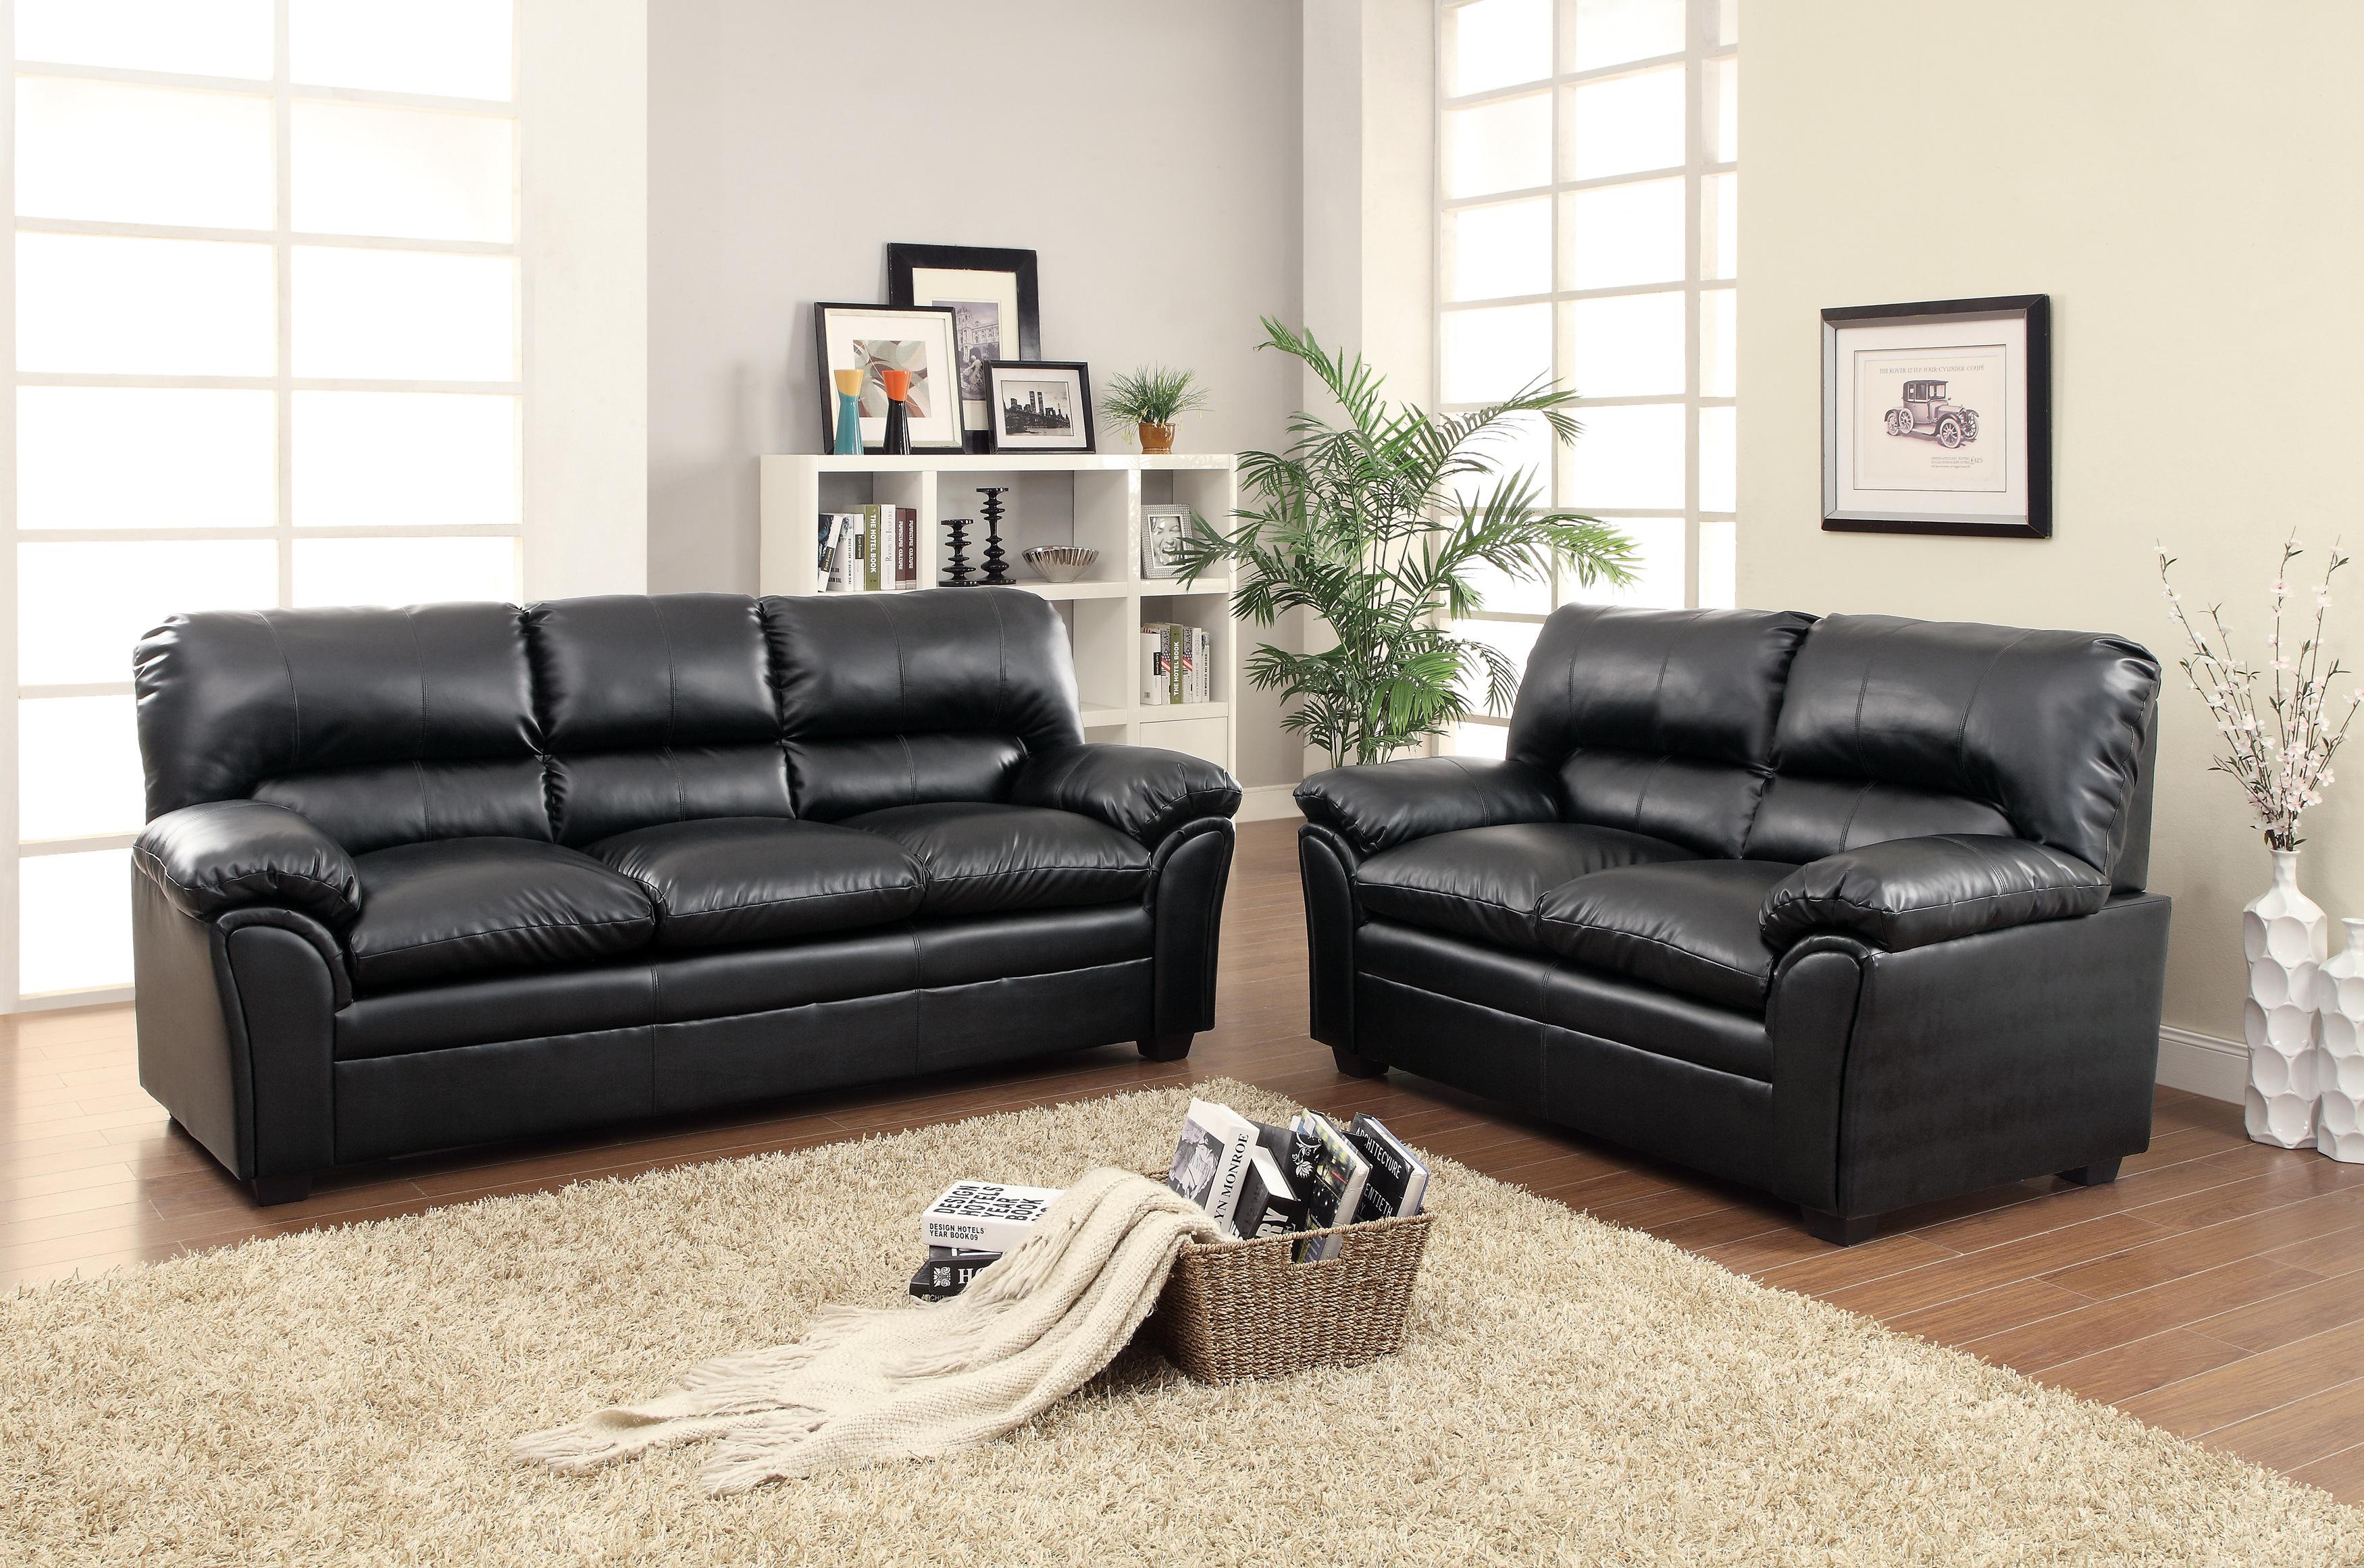 Transitional Living Room Set 8511BK-2PC Talon 8511BK-2PC in Black Faux Leather